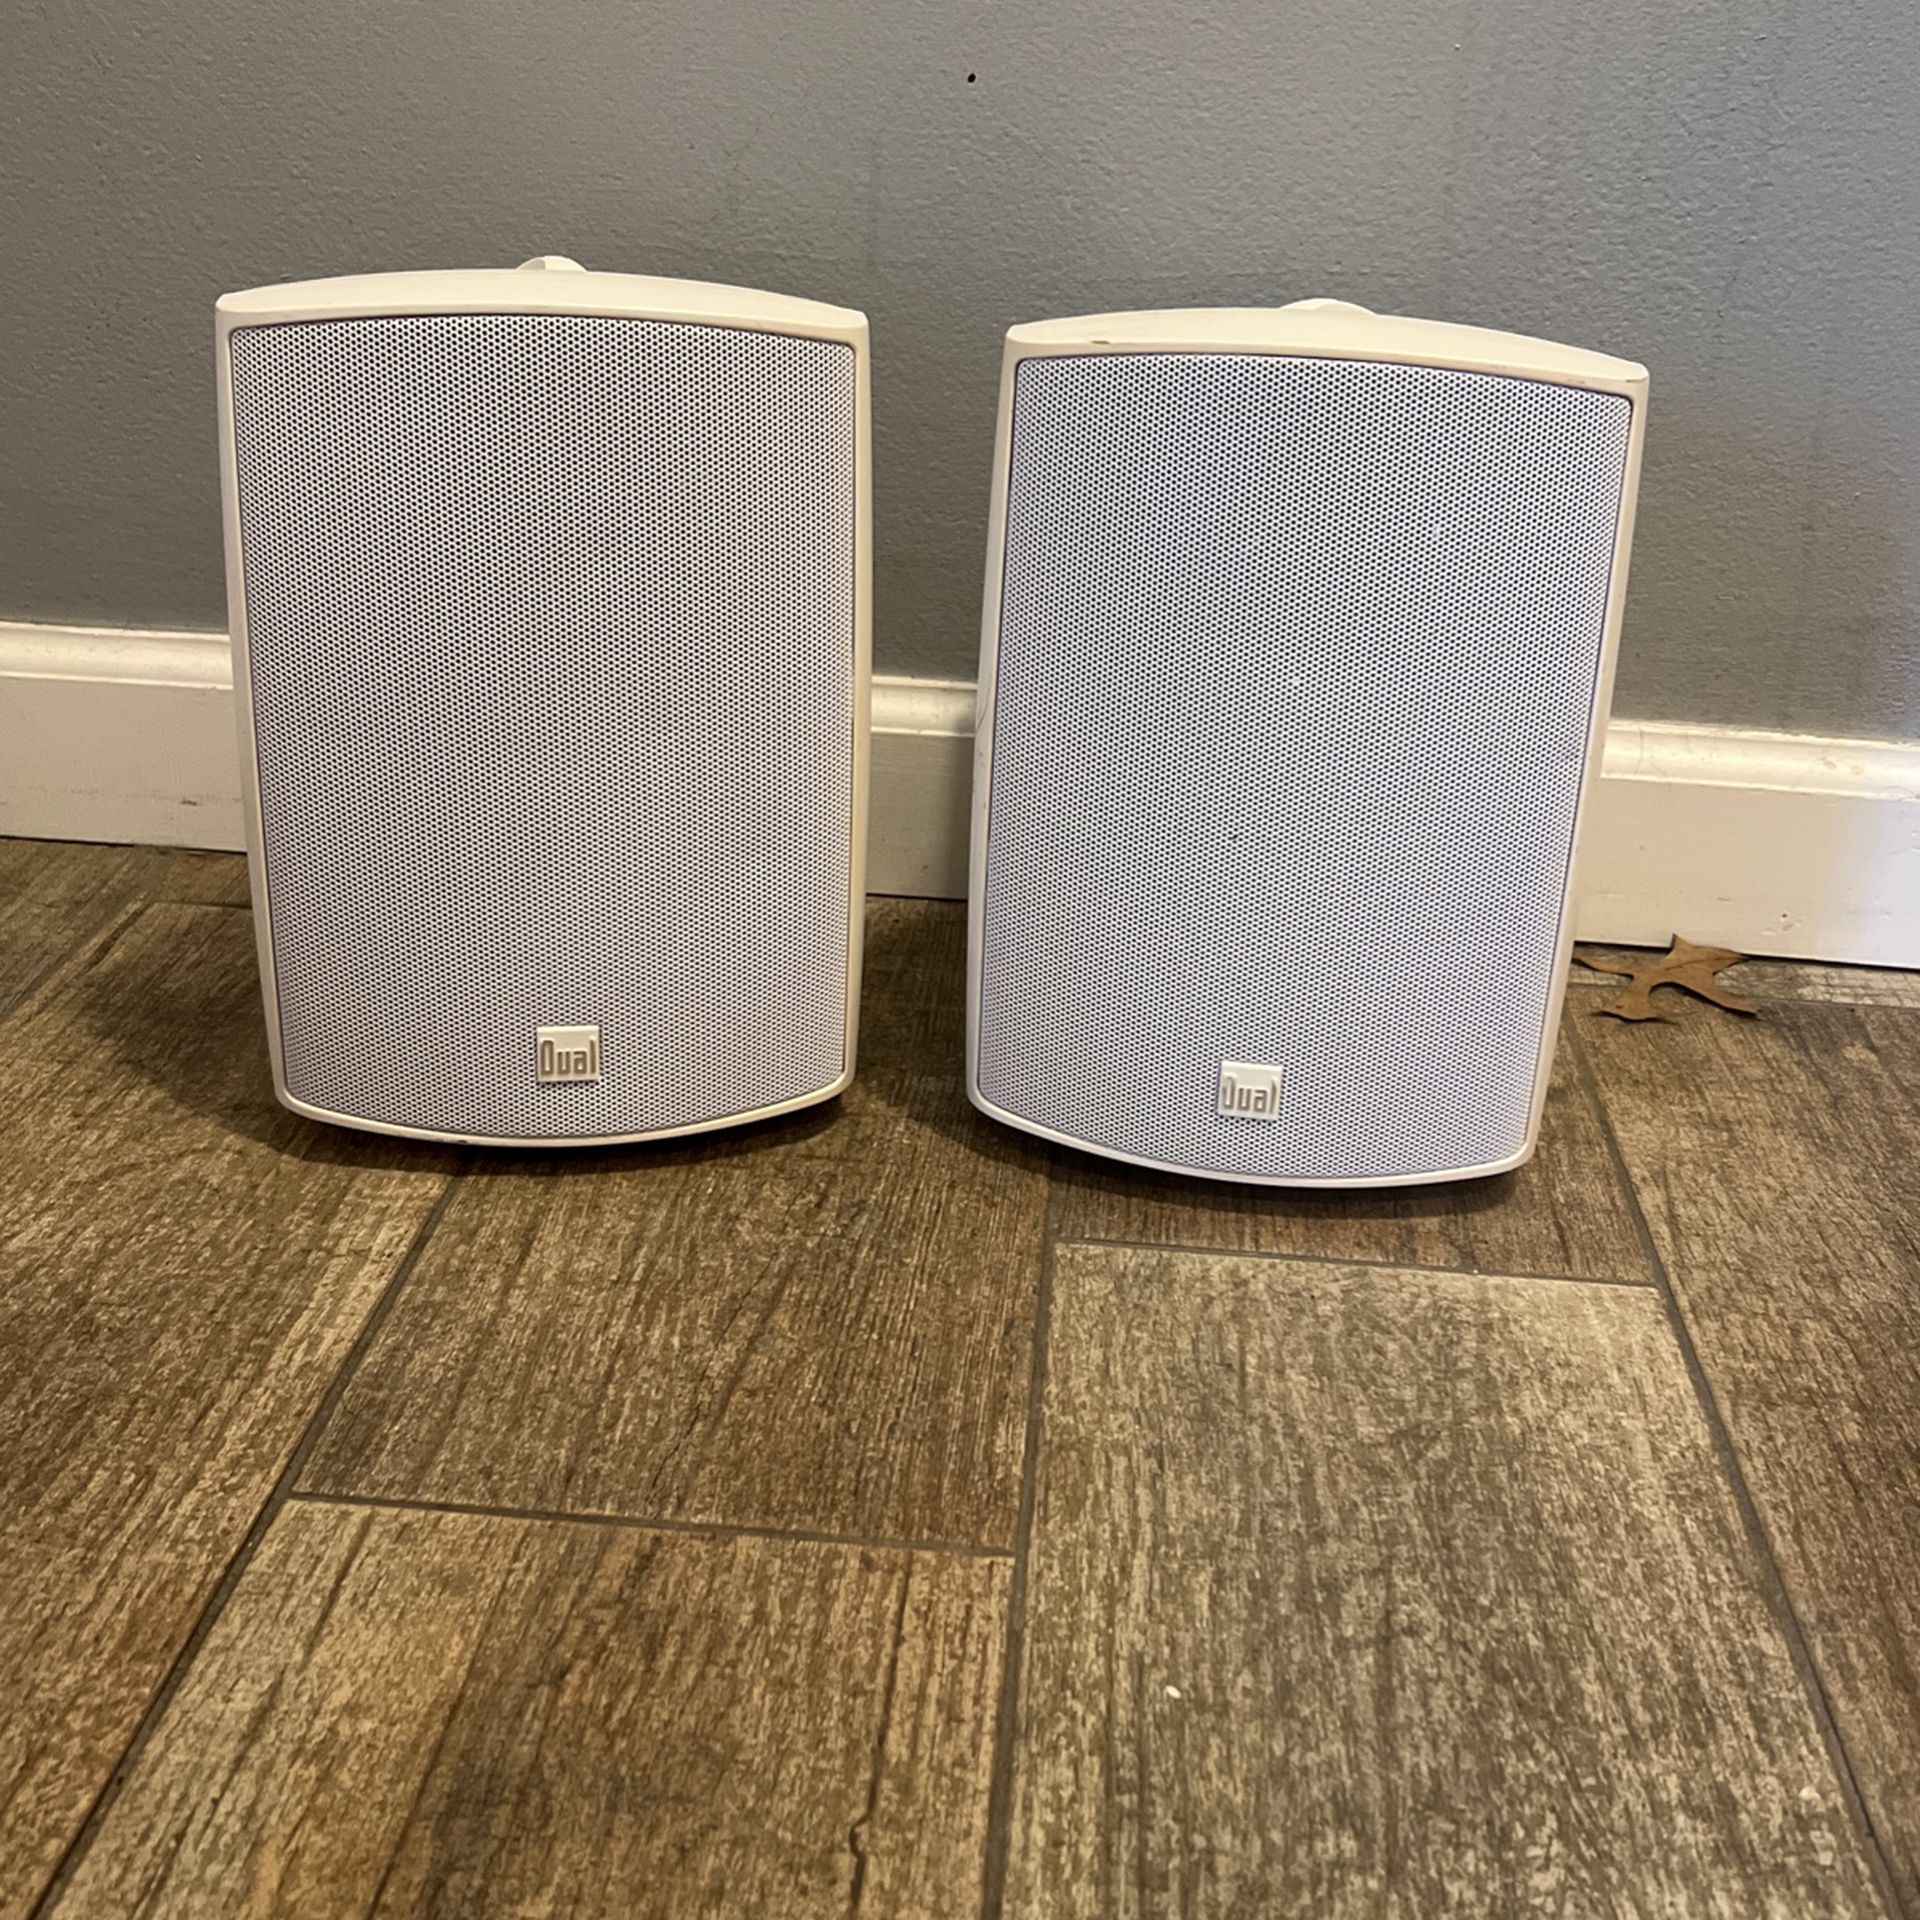 Dual Lu53Pw Outdoor Speakers